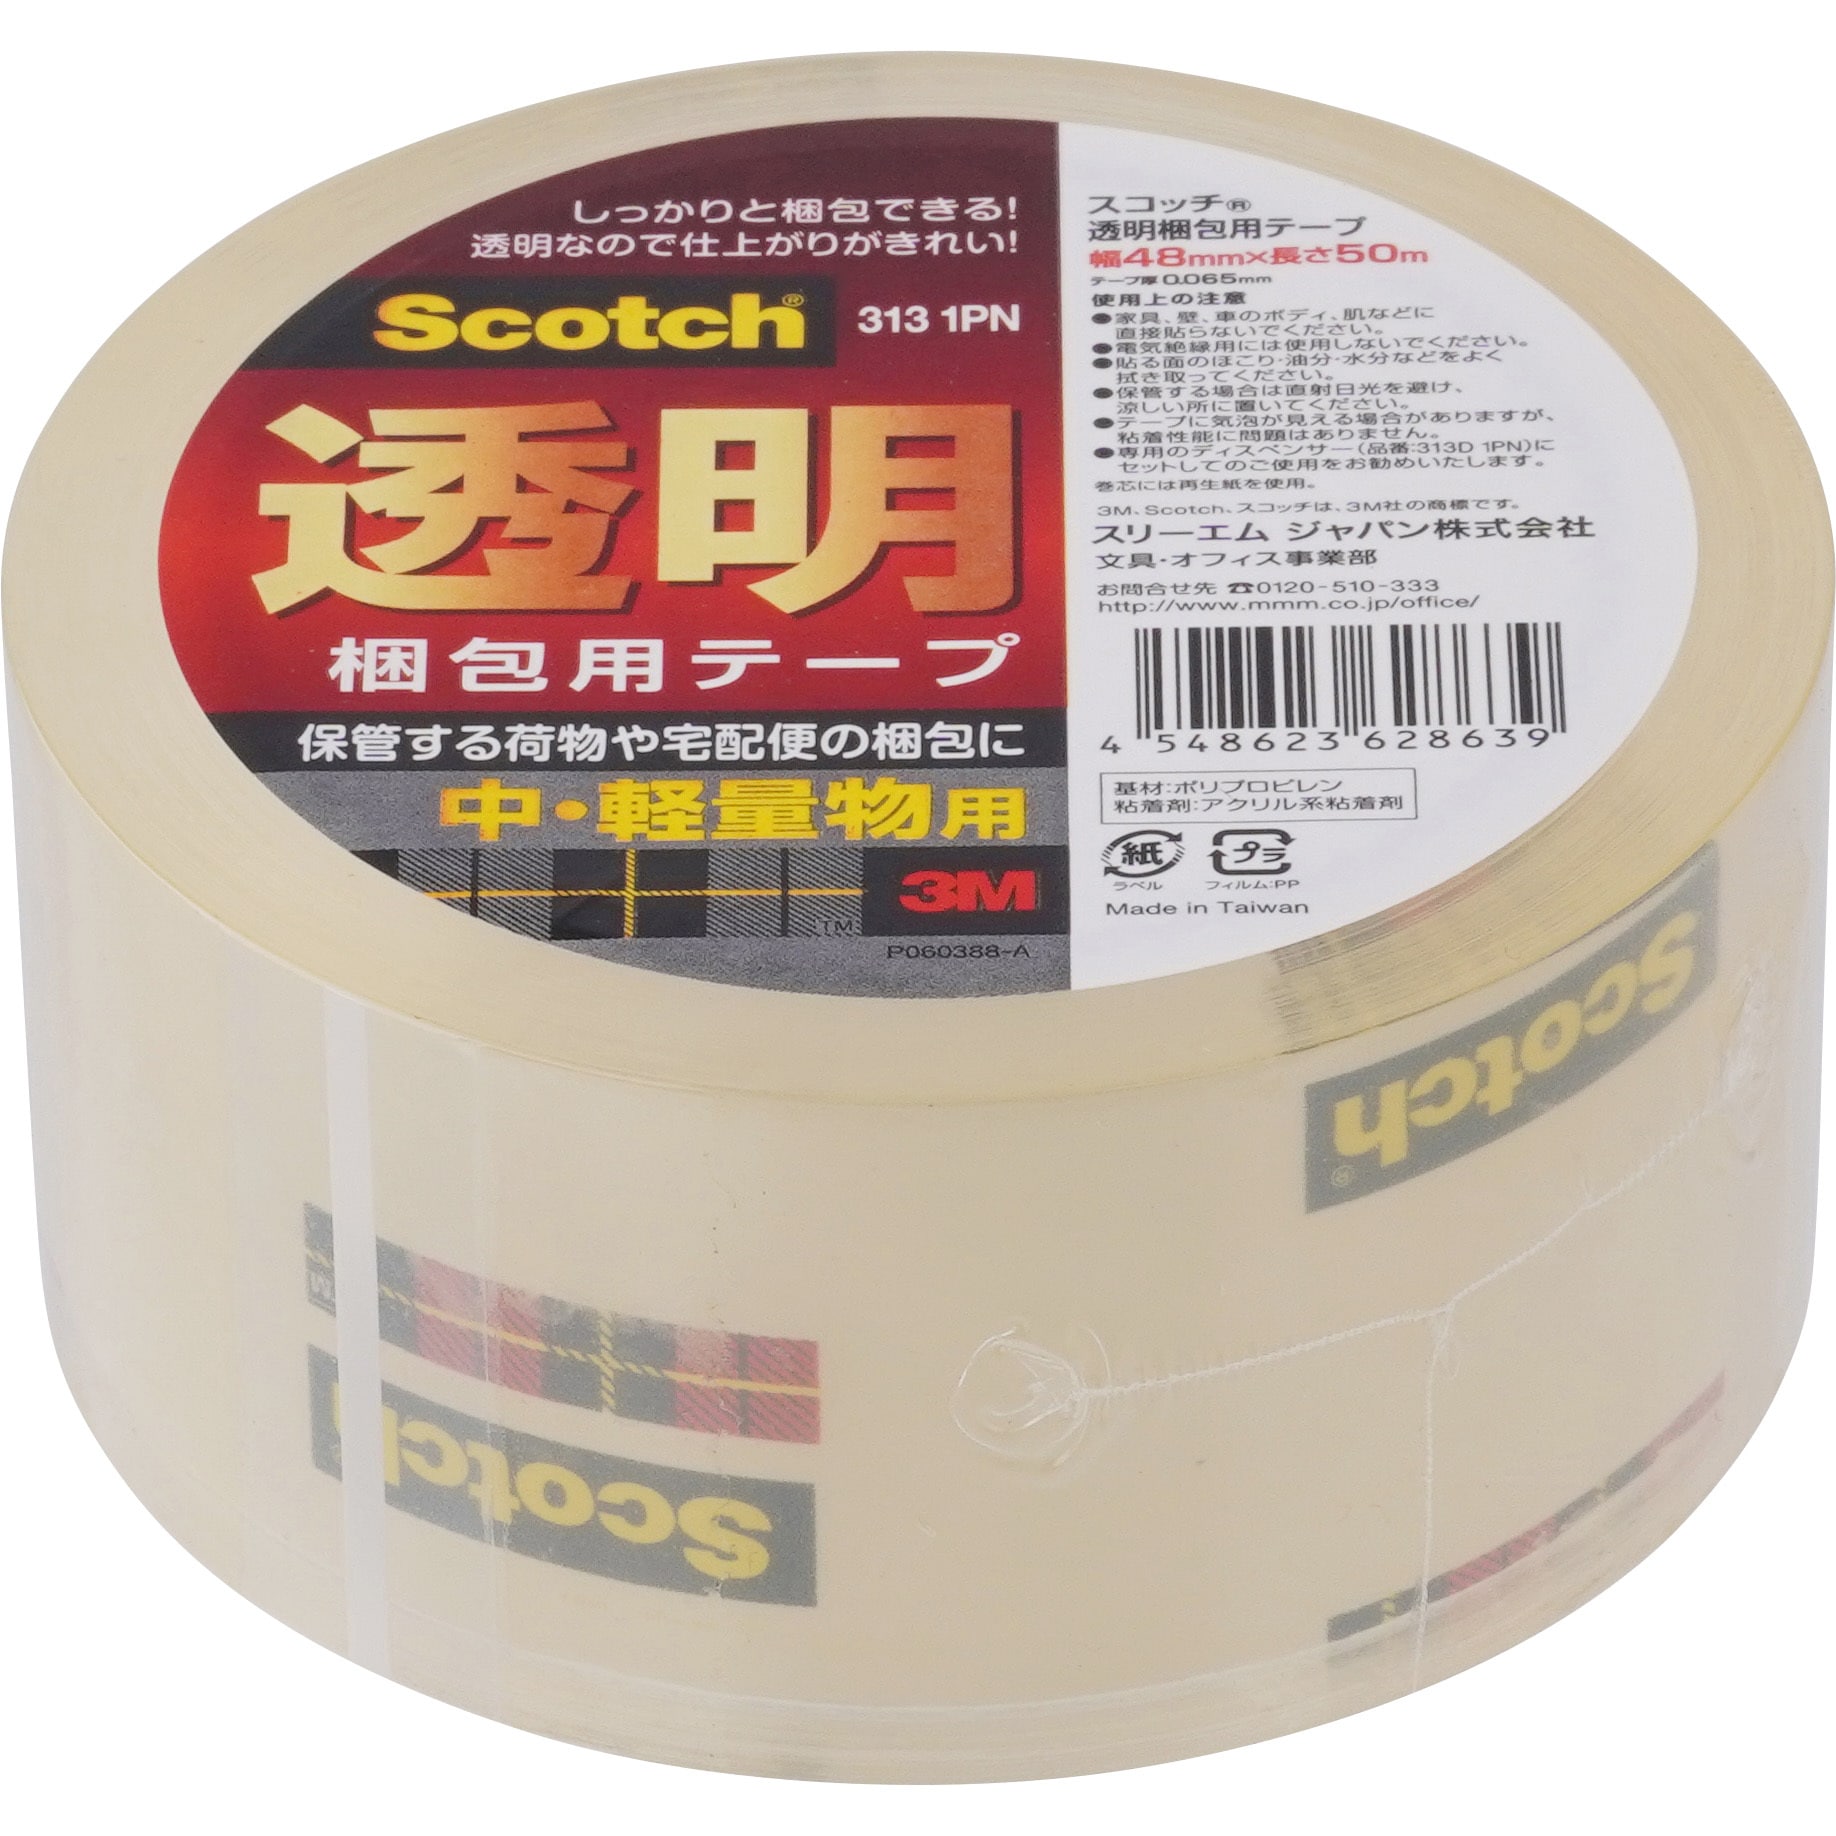 3M スコッチ 透明梱包用粘着テープ(313) 48mm×50m 1箱（50巻入）セット - 1